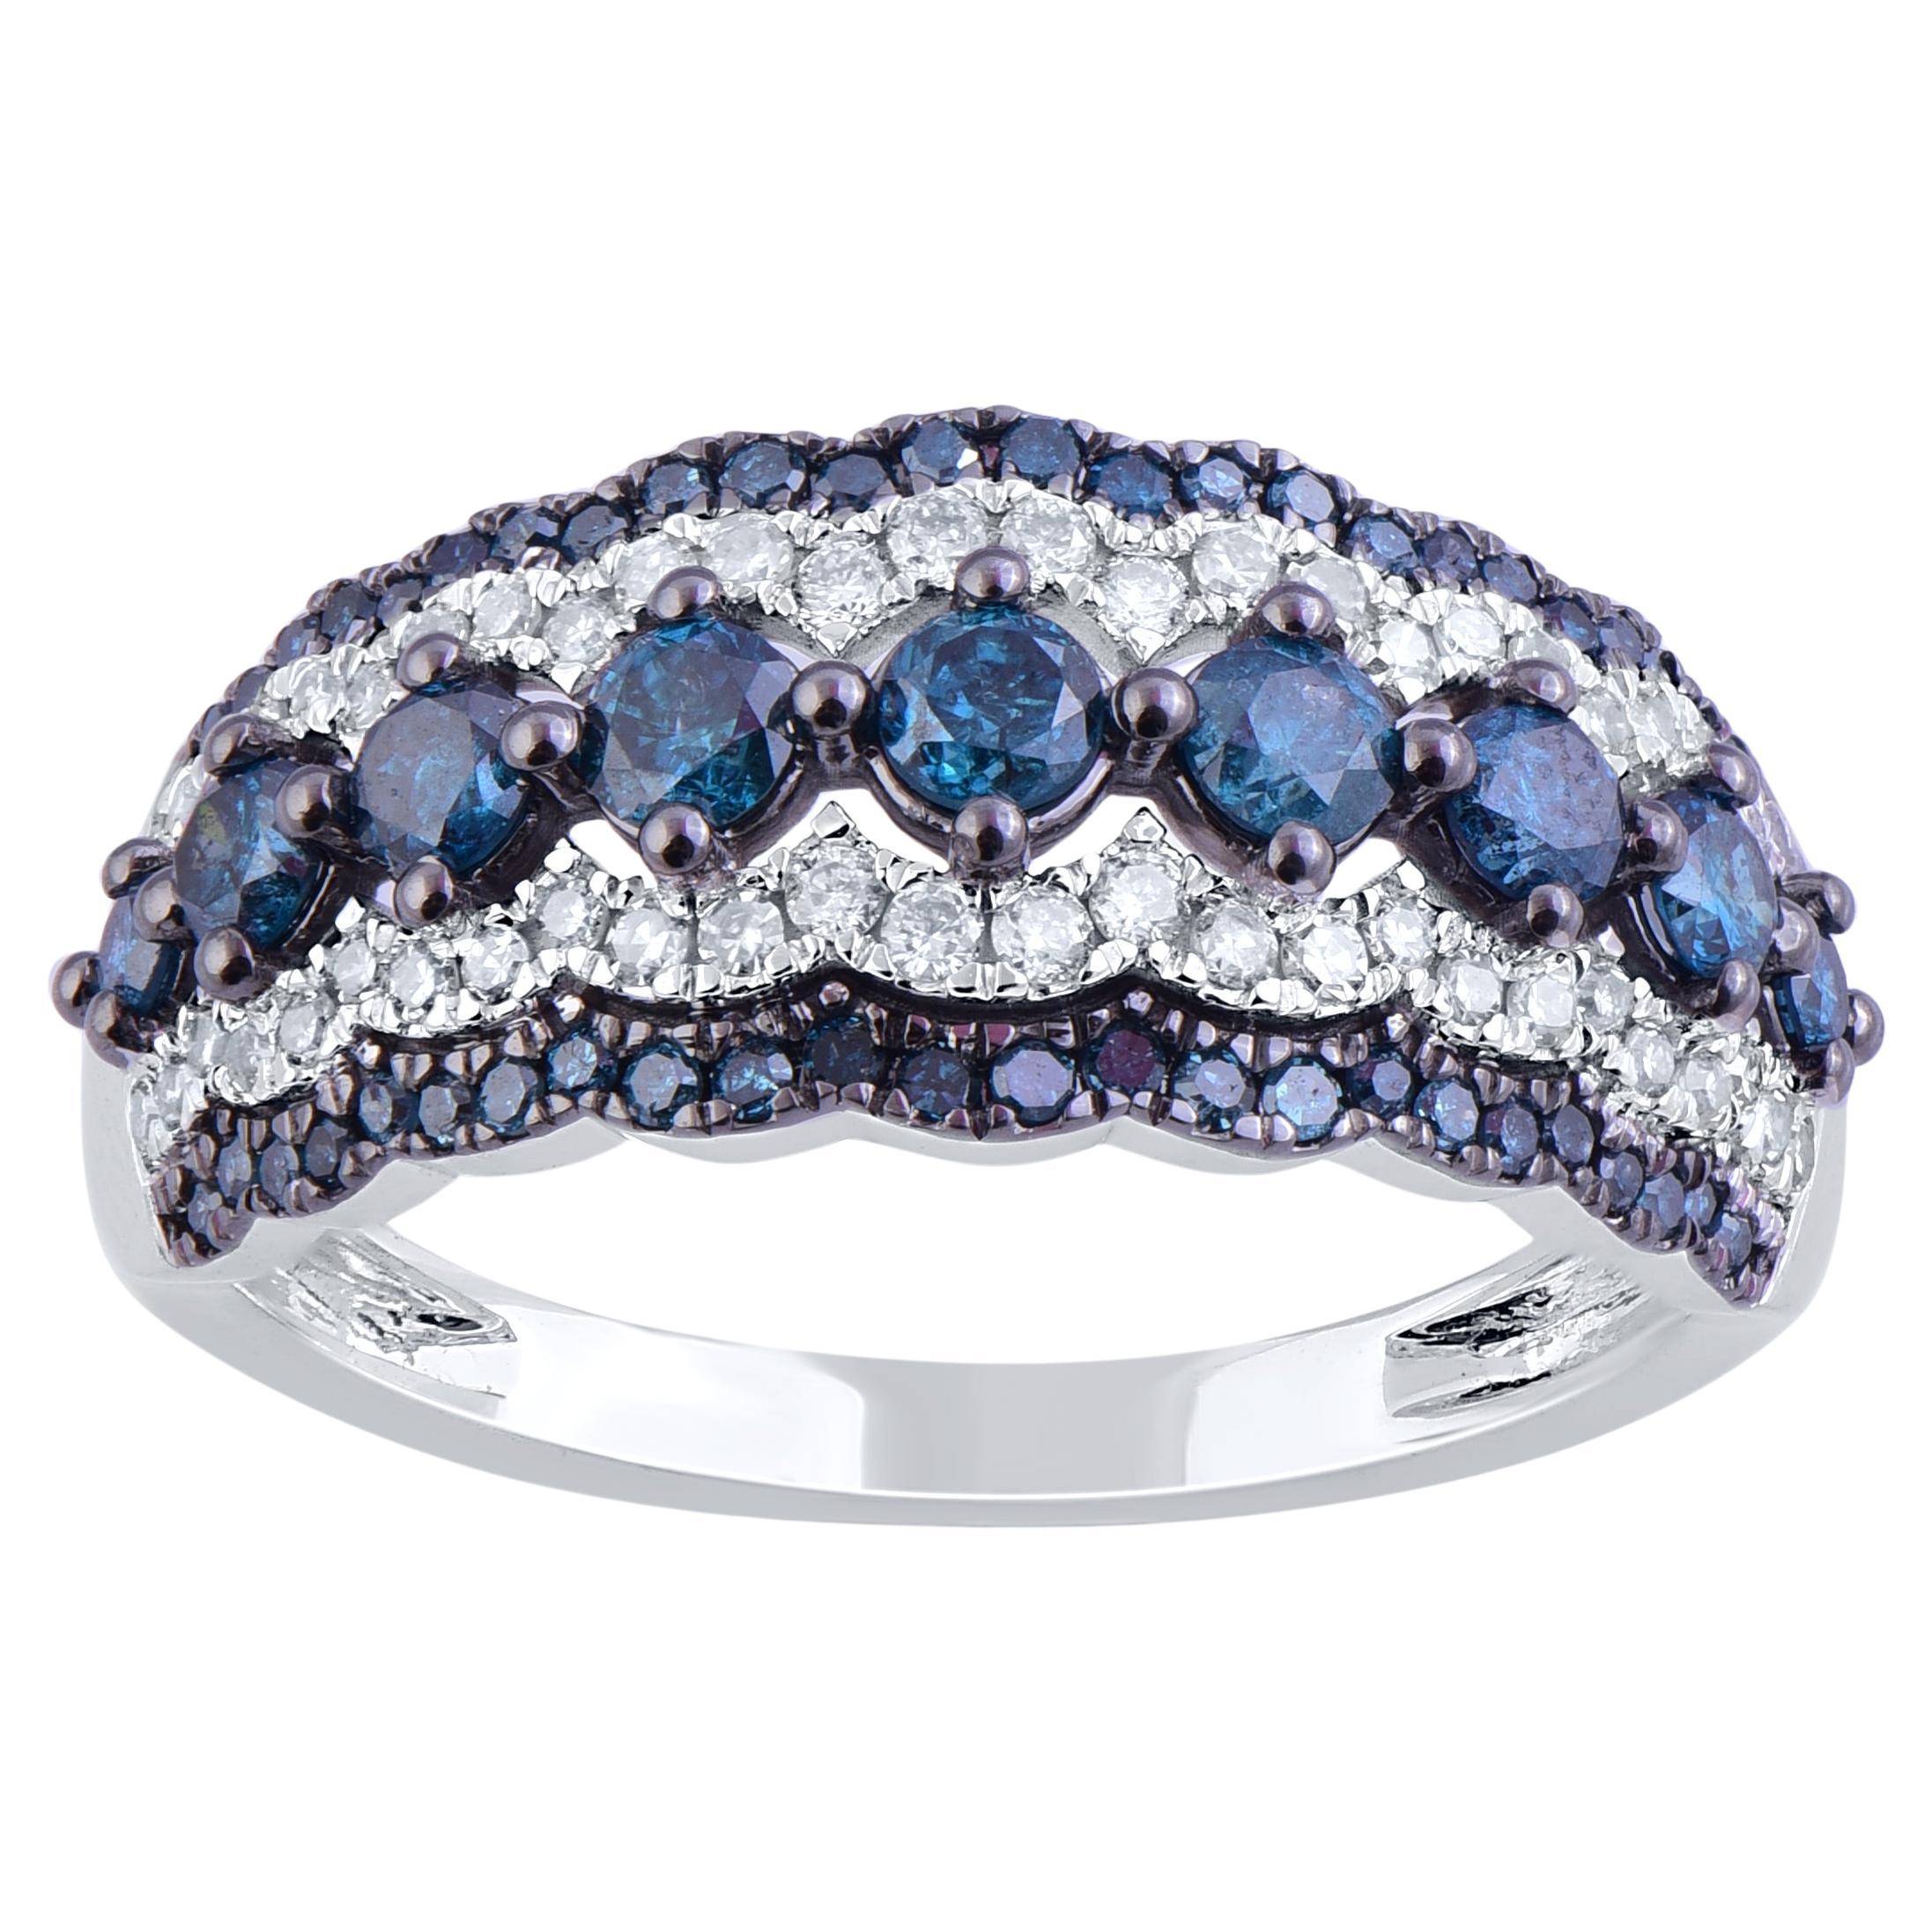 TJD 1.0 Carat White & Blue Treated Diamond 14 Karat White Gold Wedding Band Ring